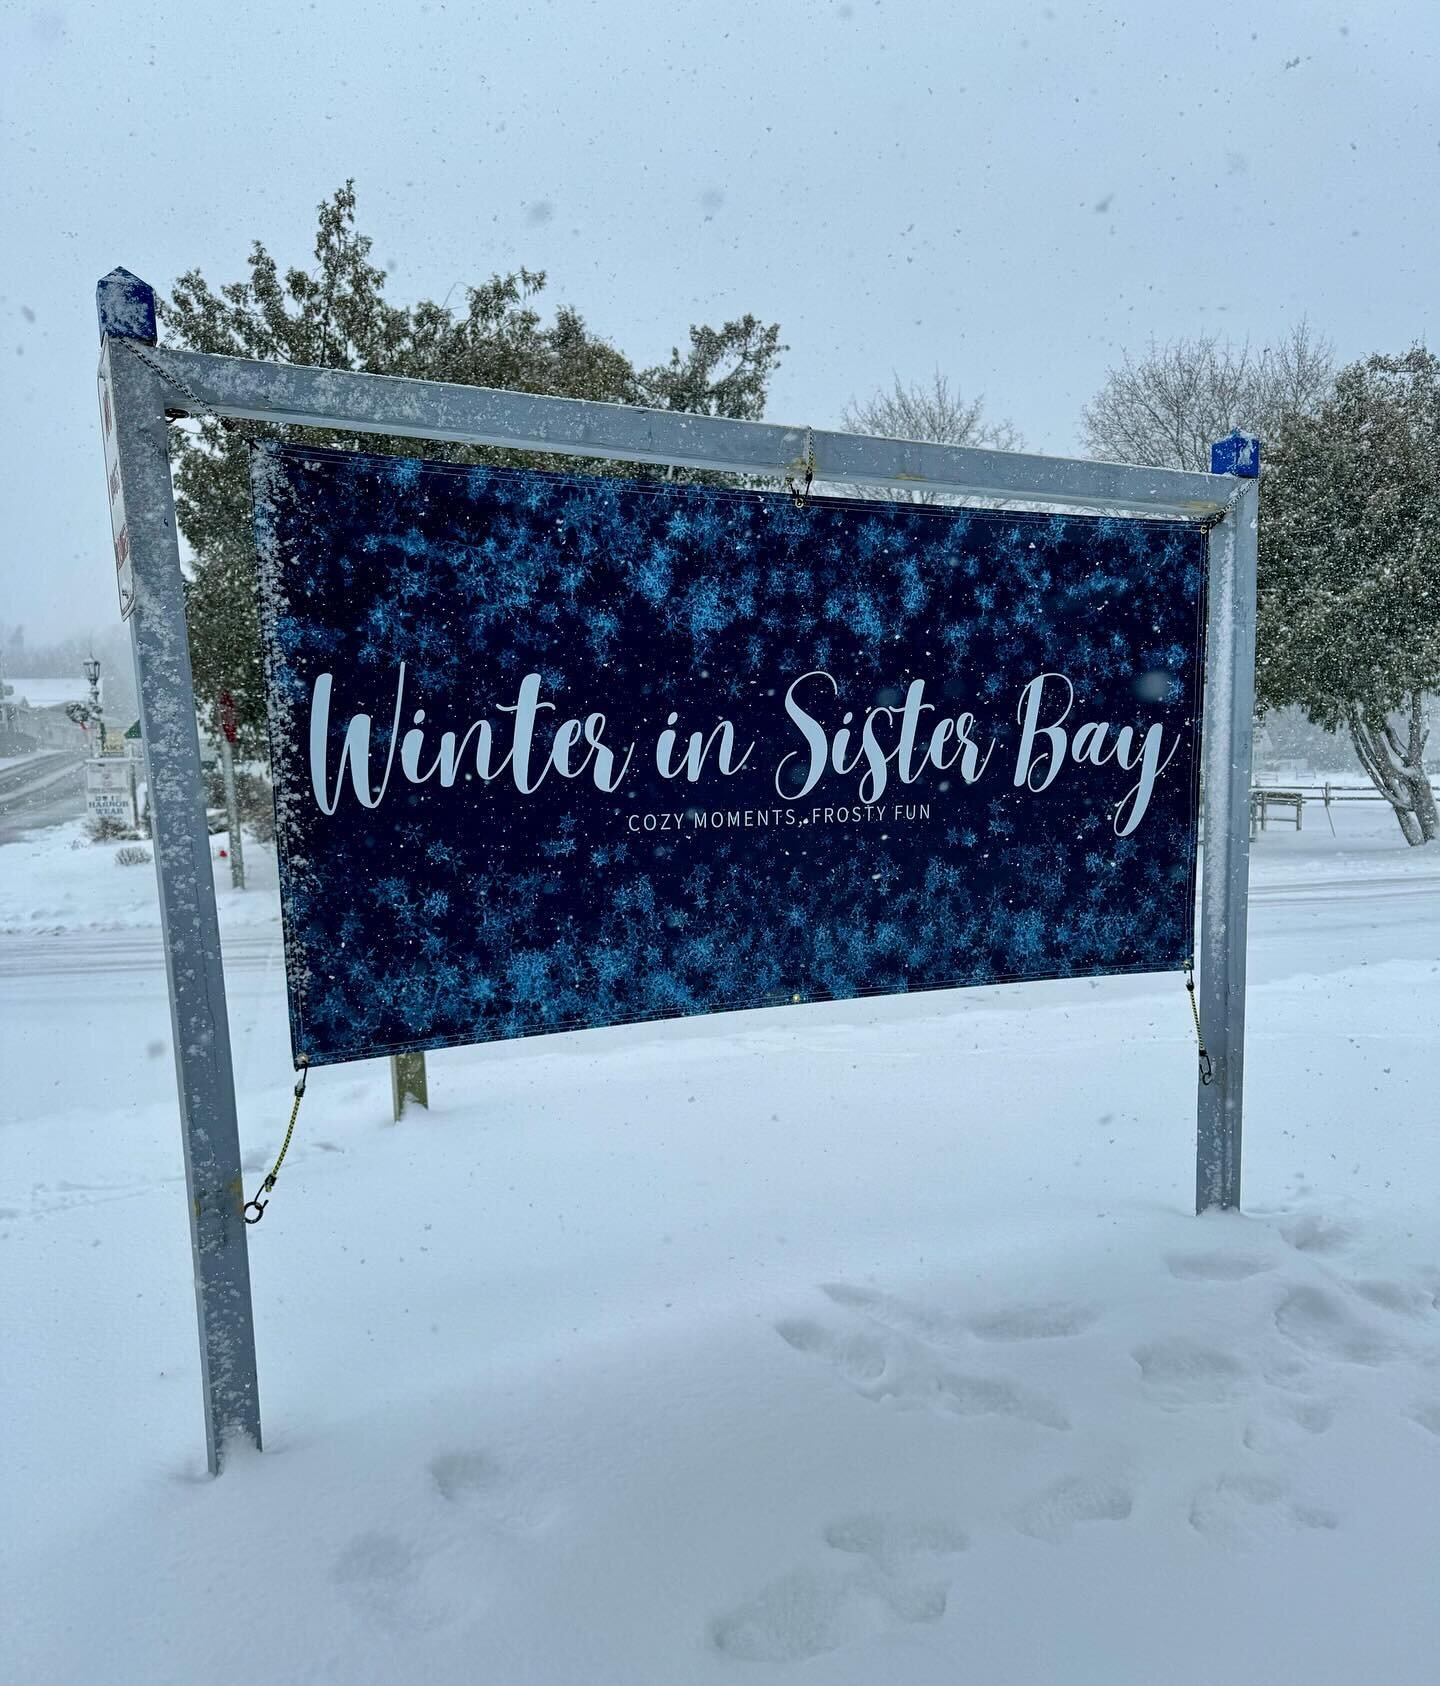 ❄️Feeling like a snow globe today❄️

#sisterbay #doorcounty #sisterbaywi #travelwisconsin #discoverwisconsin #snow #snowday #winter #blizzard